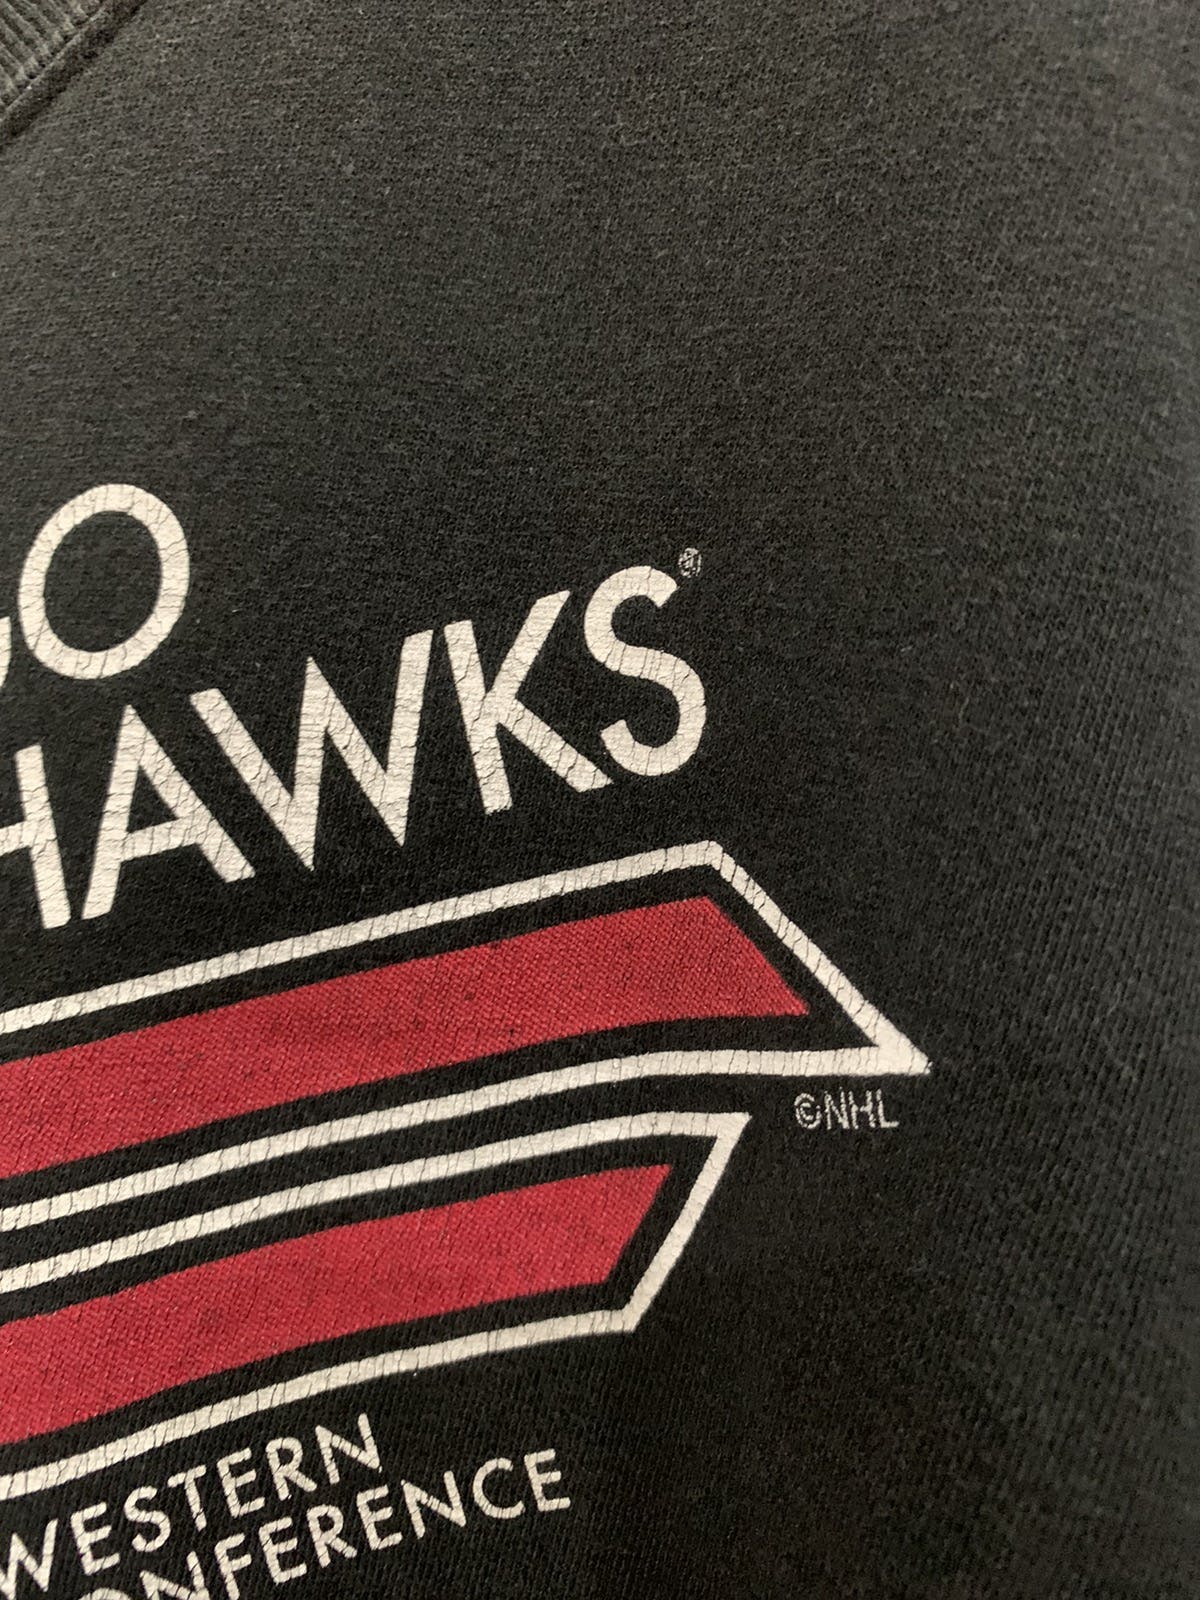 CHICAGO BLACKHAWKS HOCKEY x NFL BY REEBOK T-SHIRT - 3